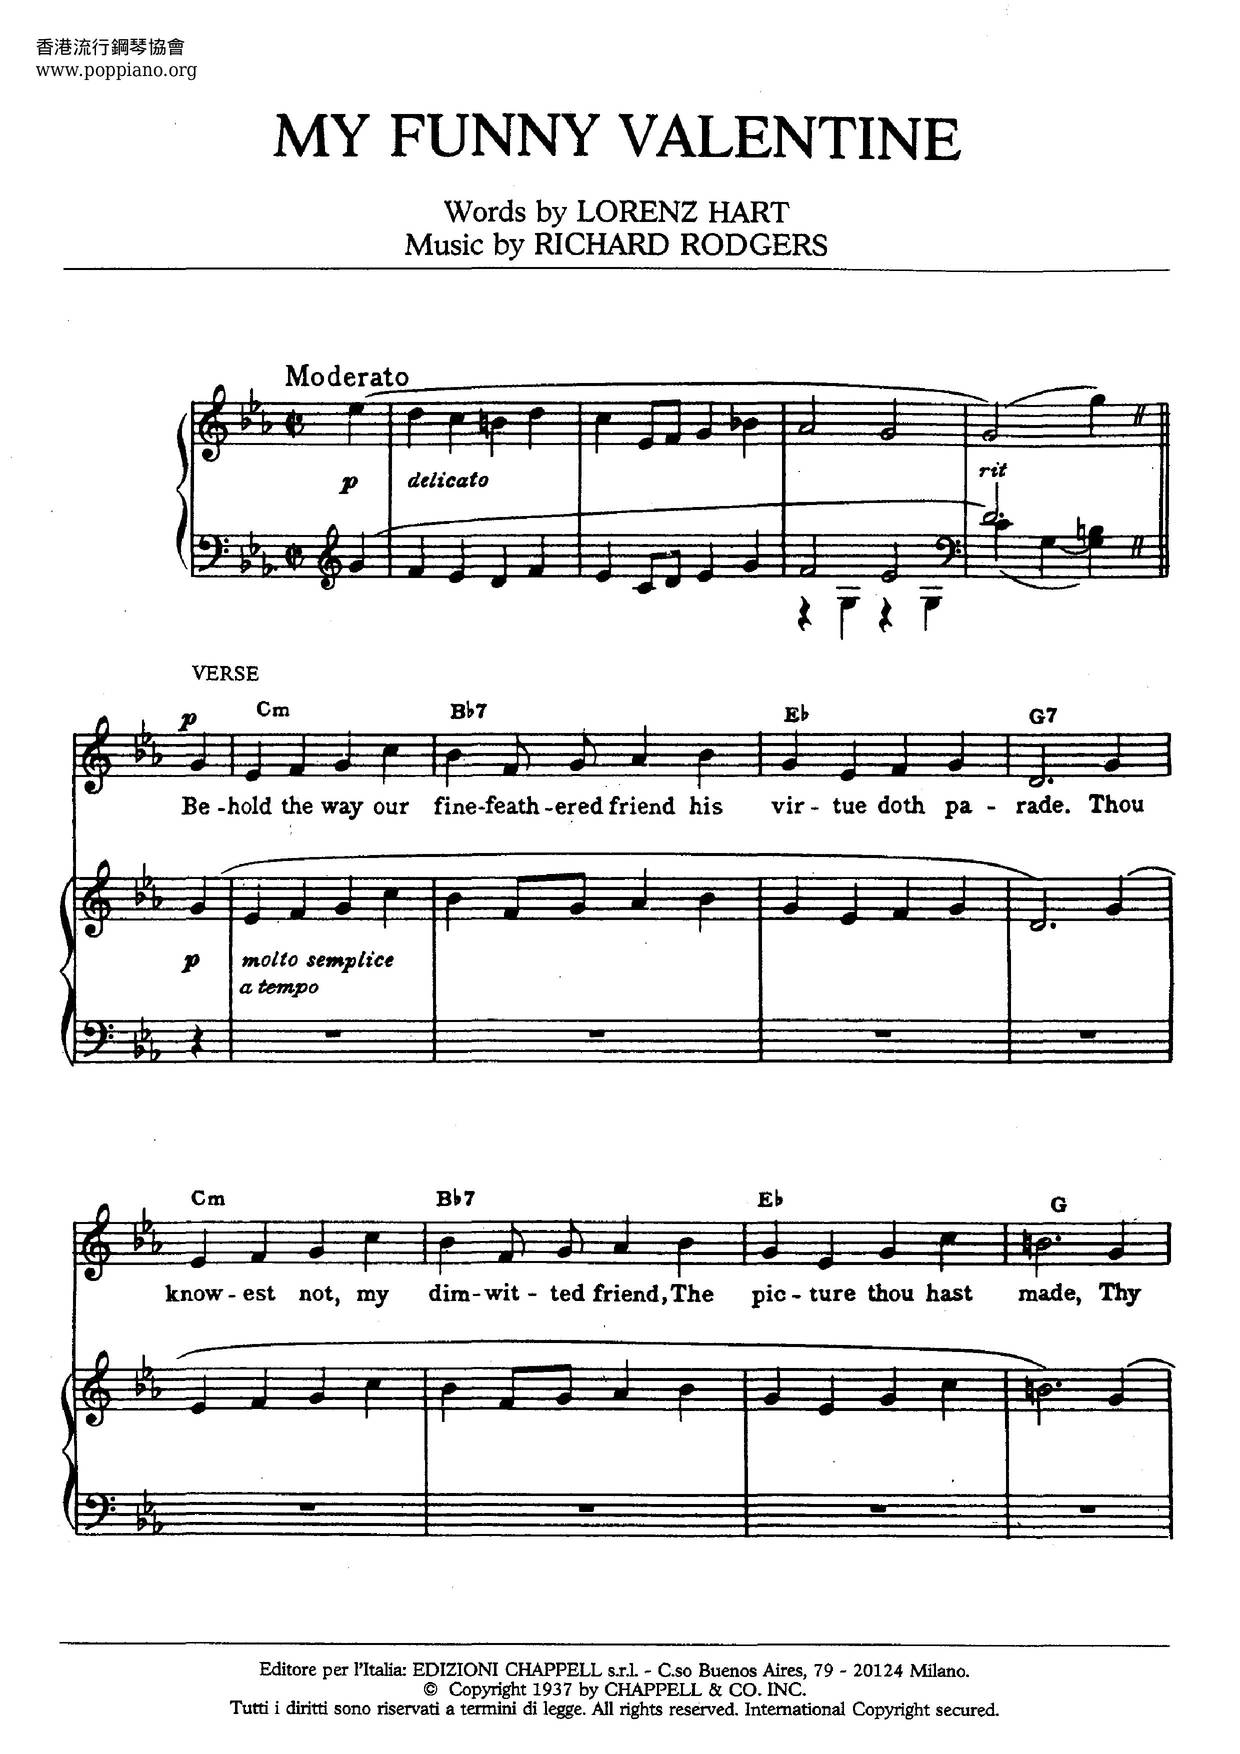 ☆ My Funny Valentine - Sheet Music / Piano Score Free PDF Download - HK Pop  Piano Academy ☆